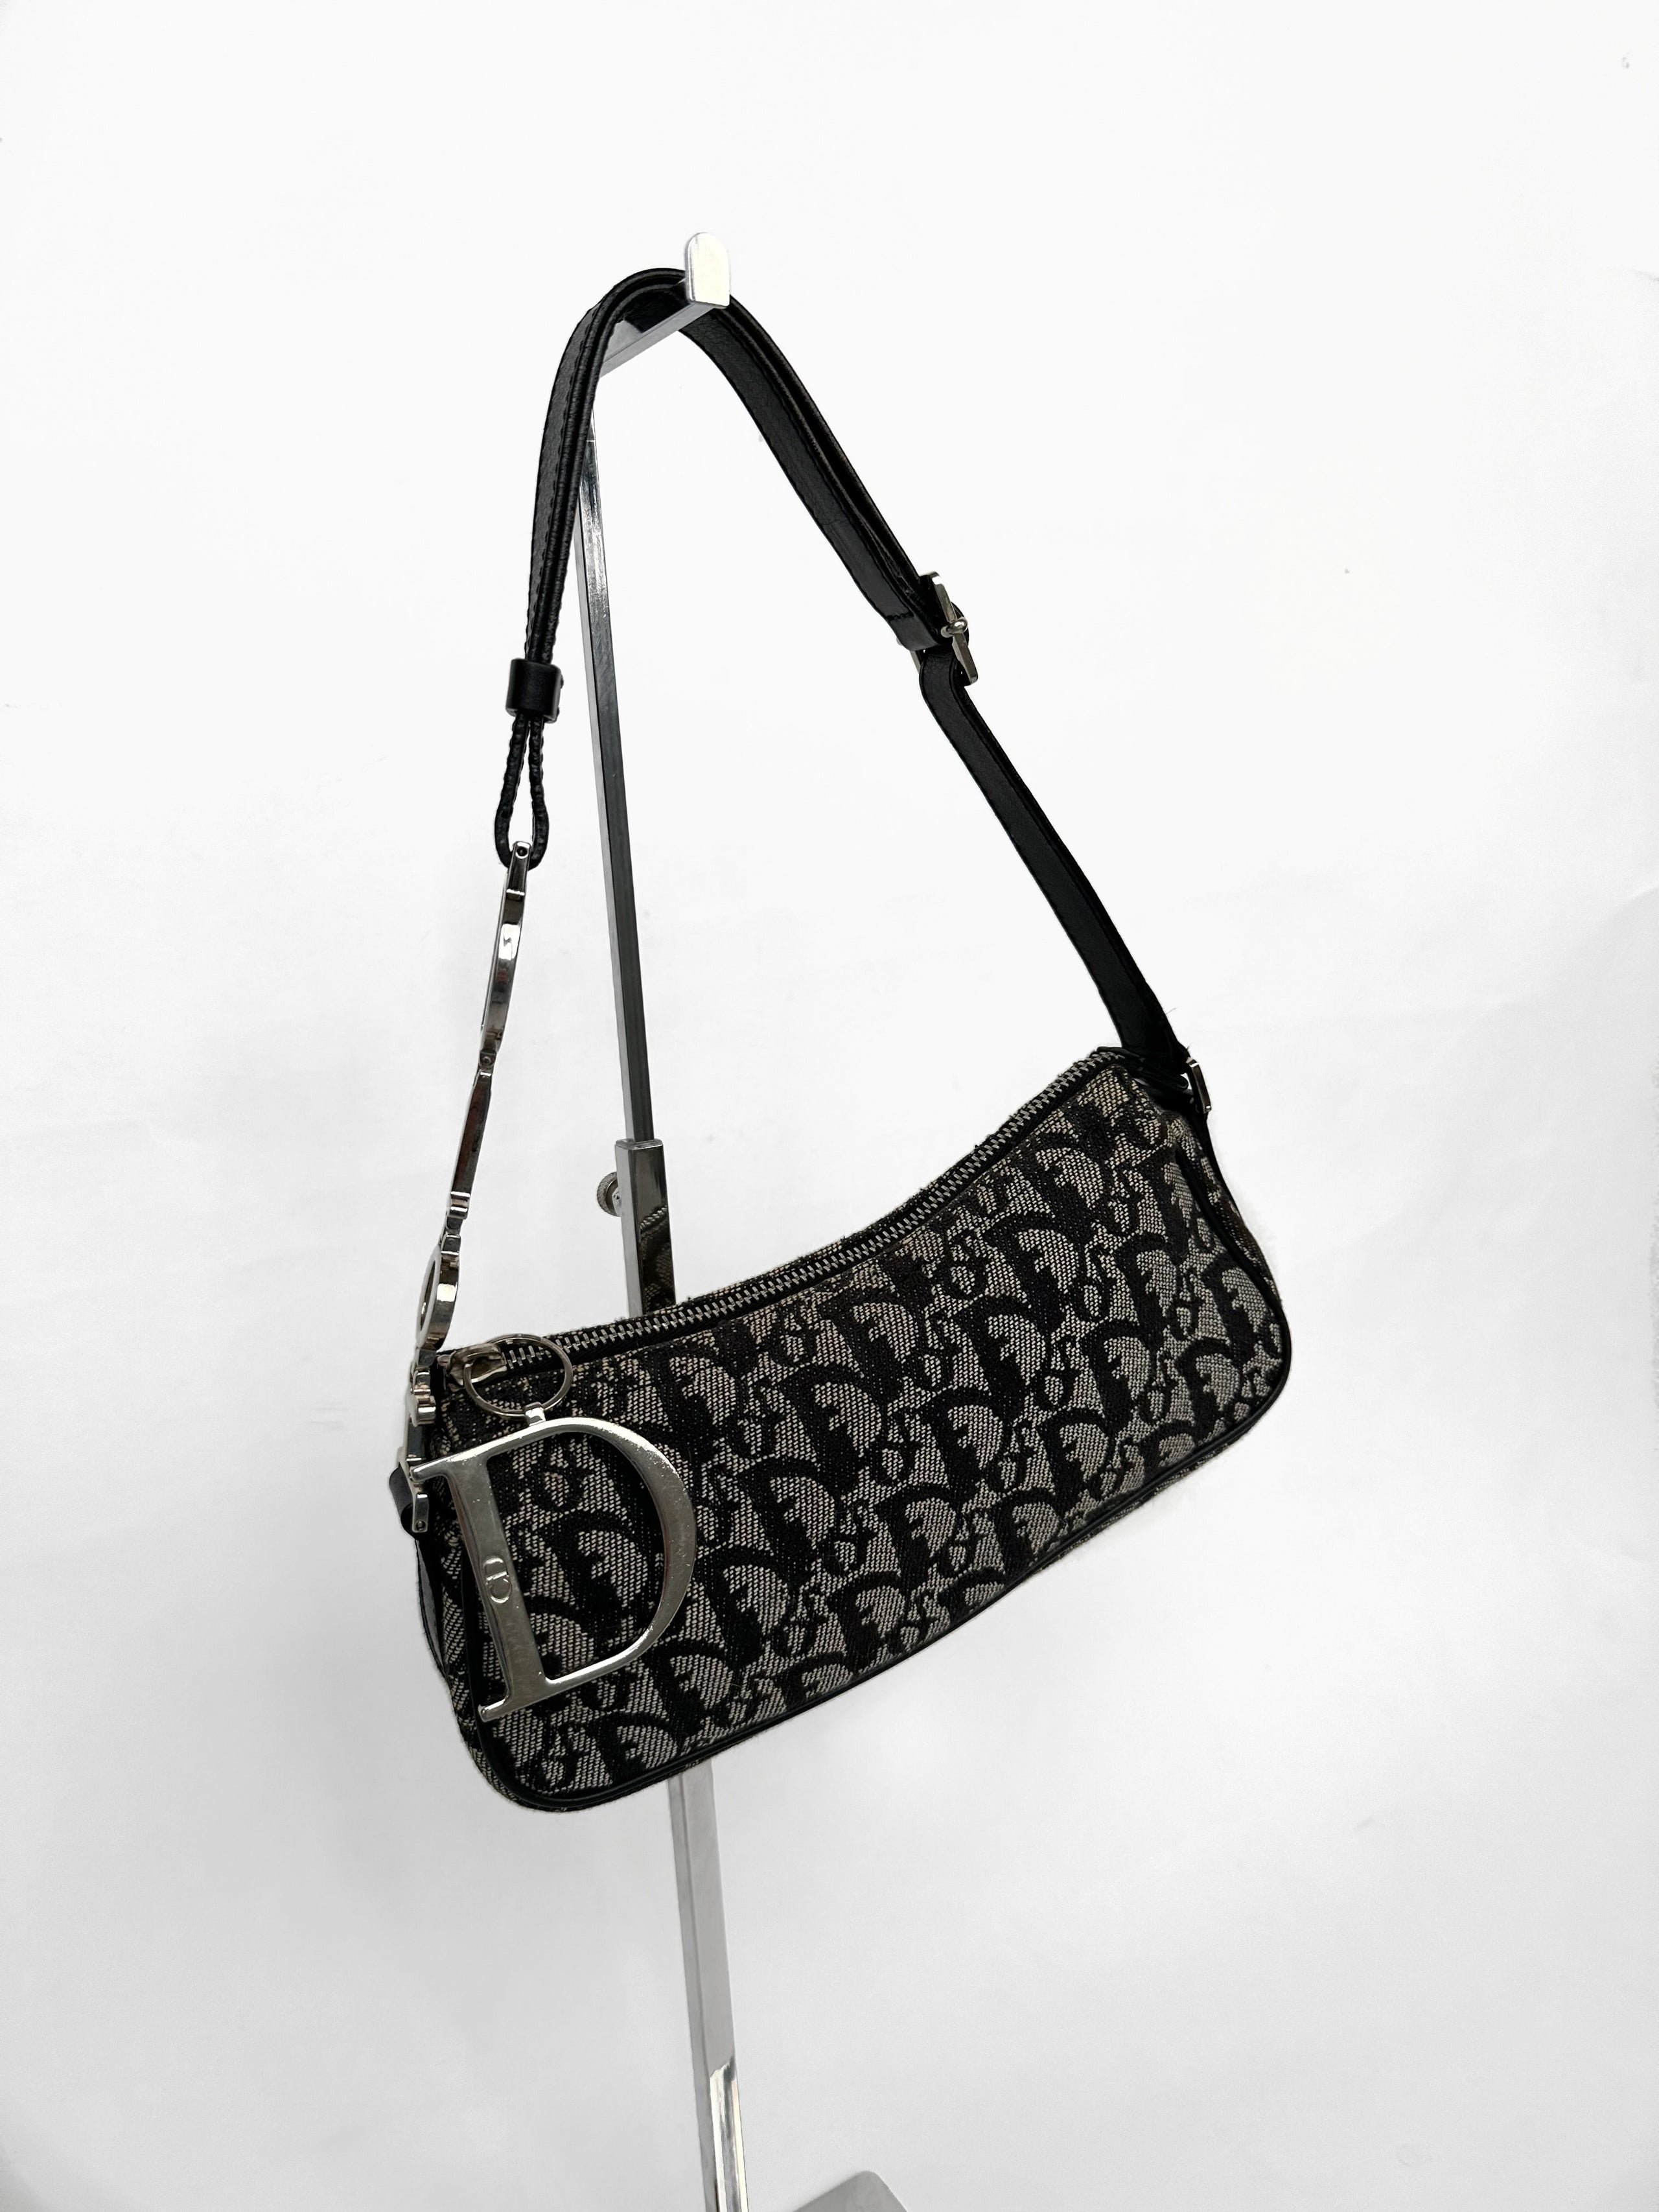 *Auth Dior Vintage Pochette PVC Leather Shoulder Bag Taupe/Brown GUC